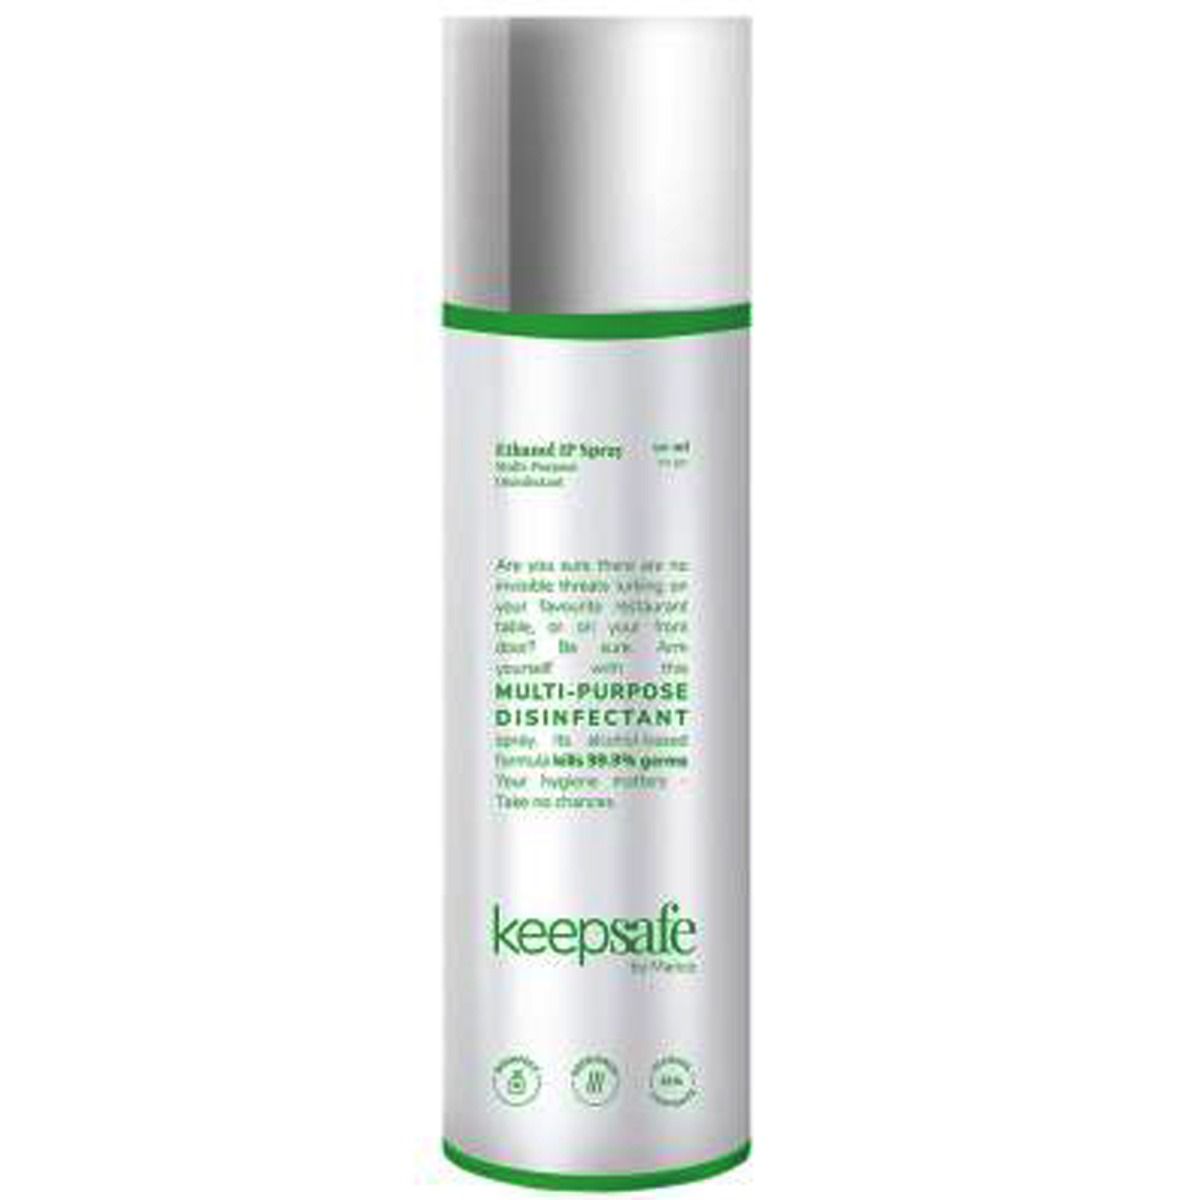 Buy KeepSafe Multi-Purpose Disinfectant Spray, 90ml Online